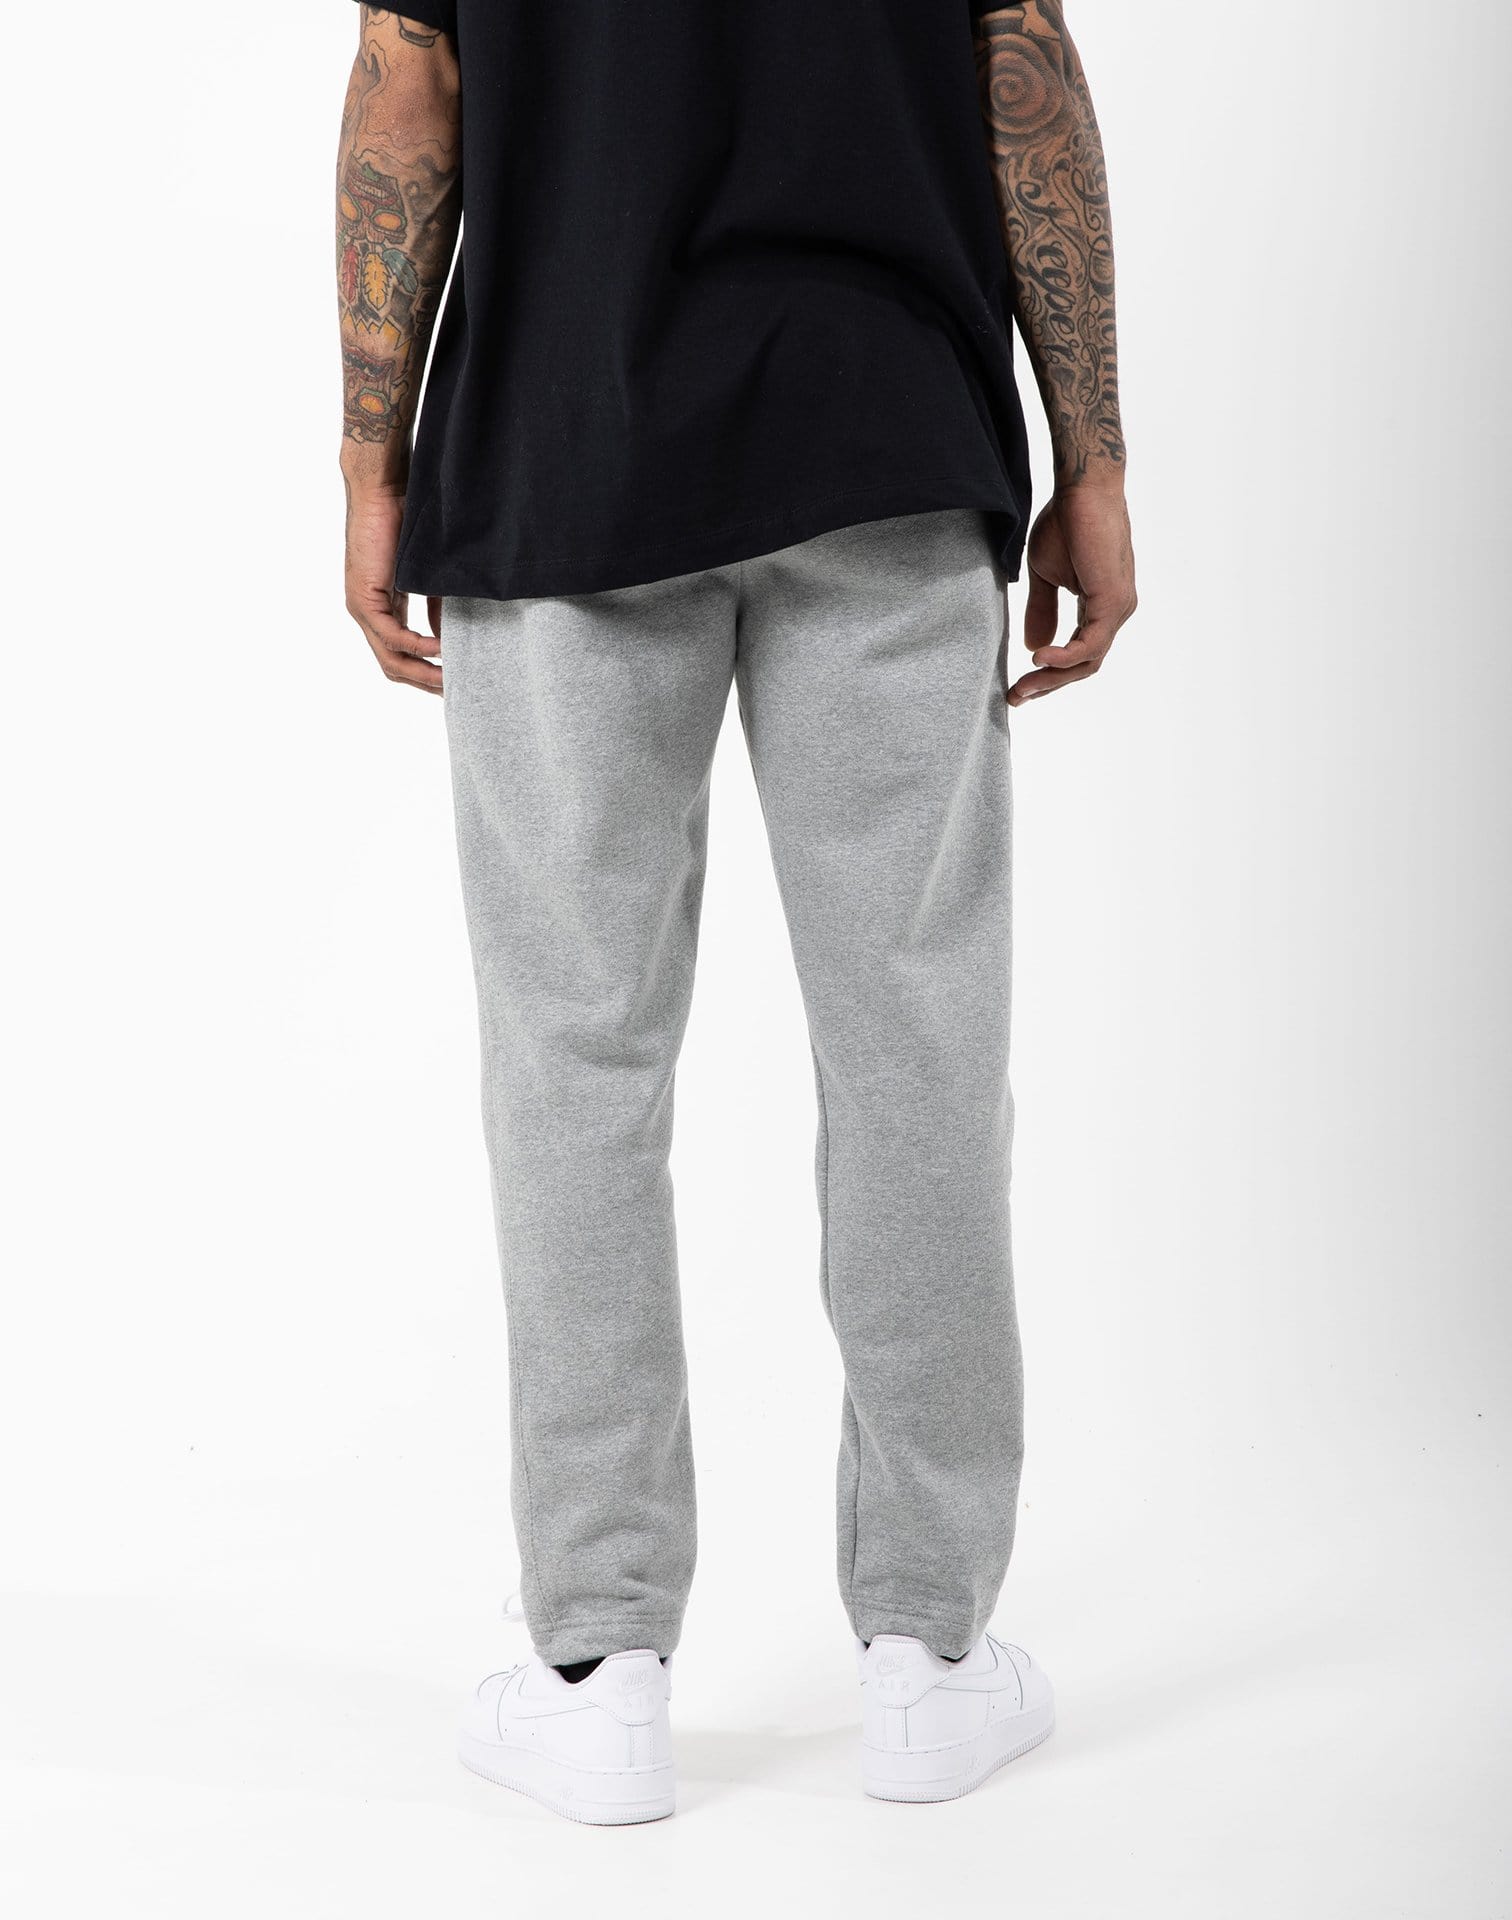 Nike Joggers Fleece Sweat Pants Tracksuit Bottoms Club Mens Trousers Size  Guide | eBay